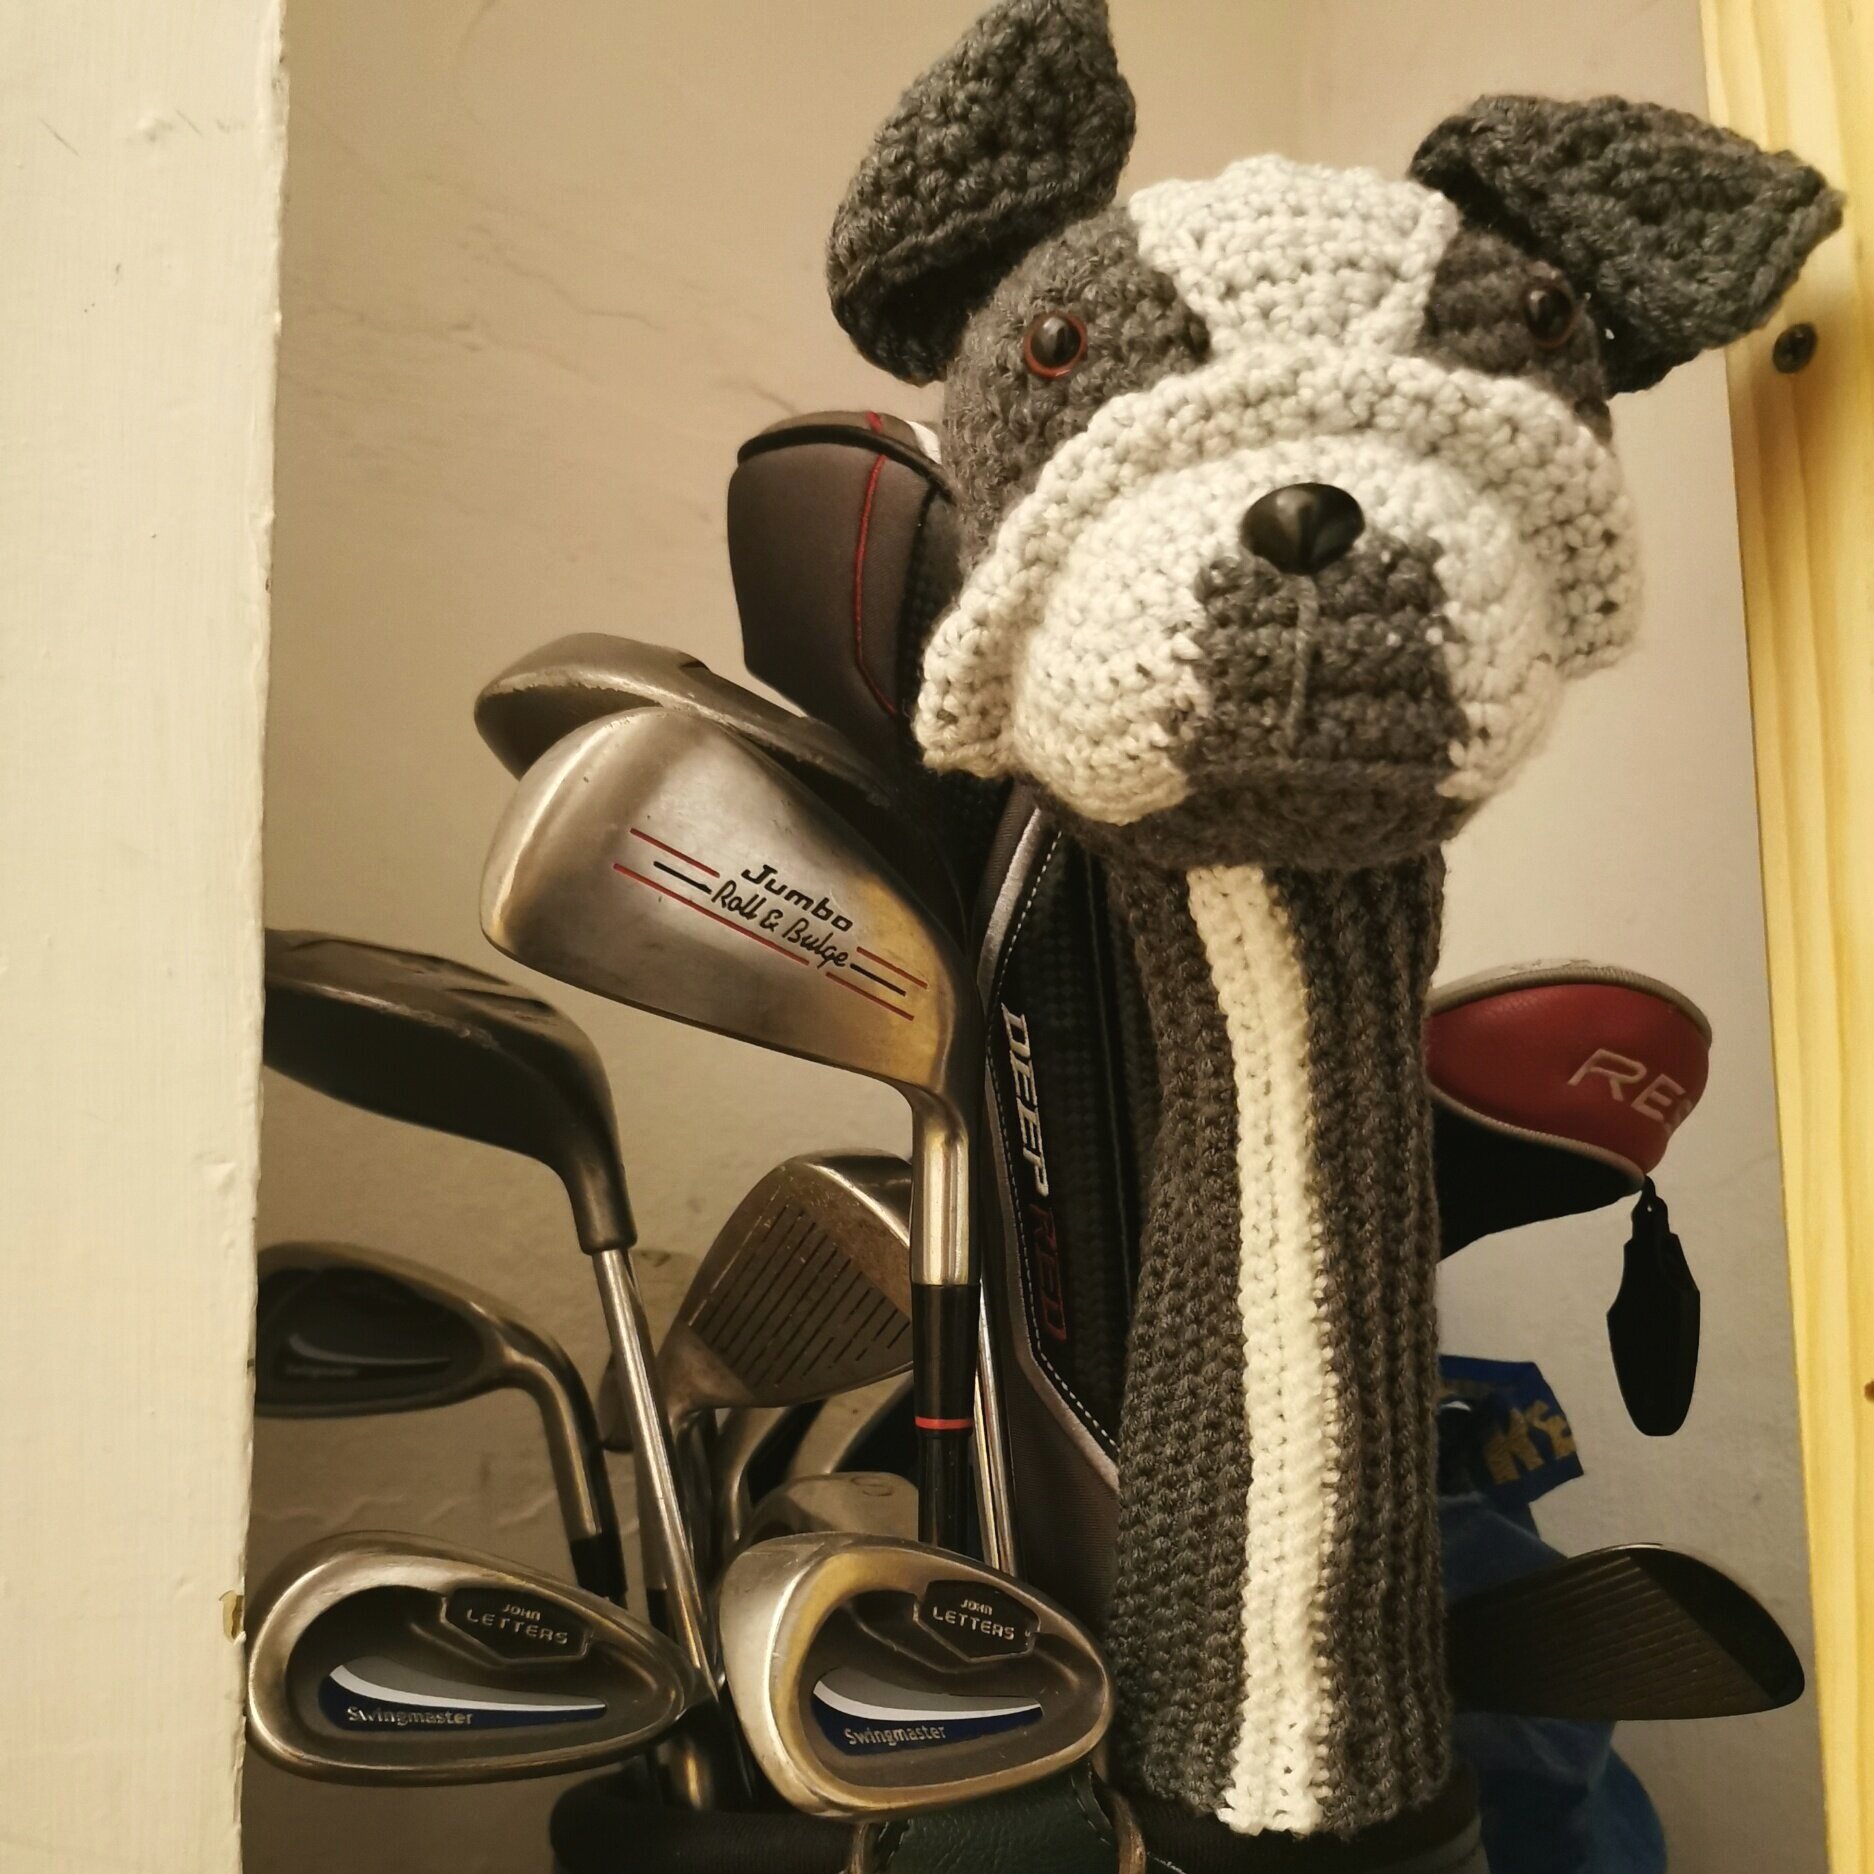 Amigurumi Golf Club Covers: 25 Crochet Patterns for Animal Golf